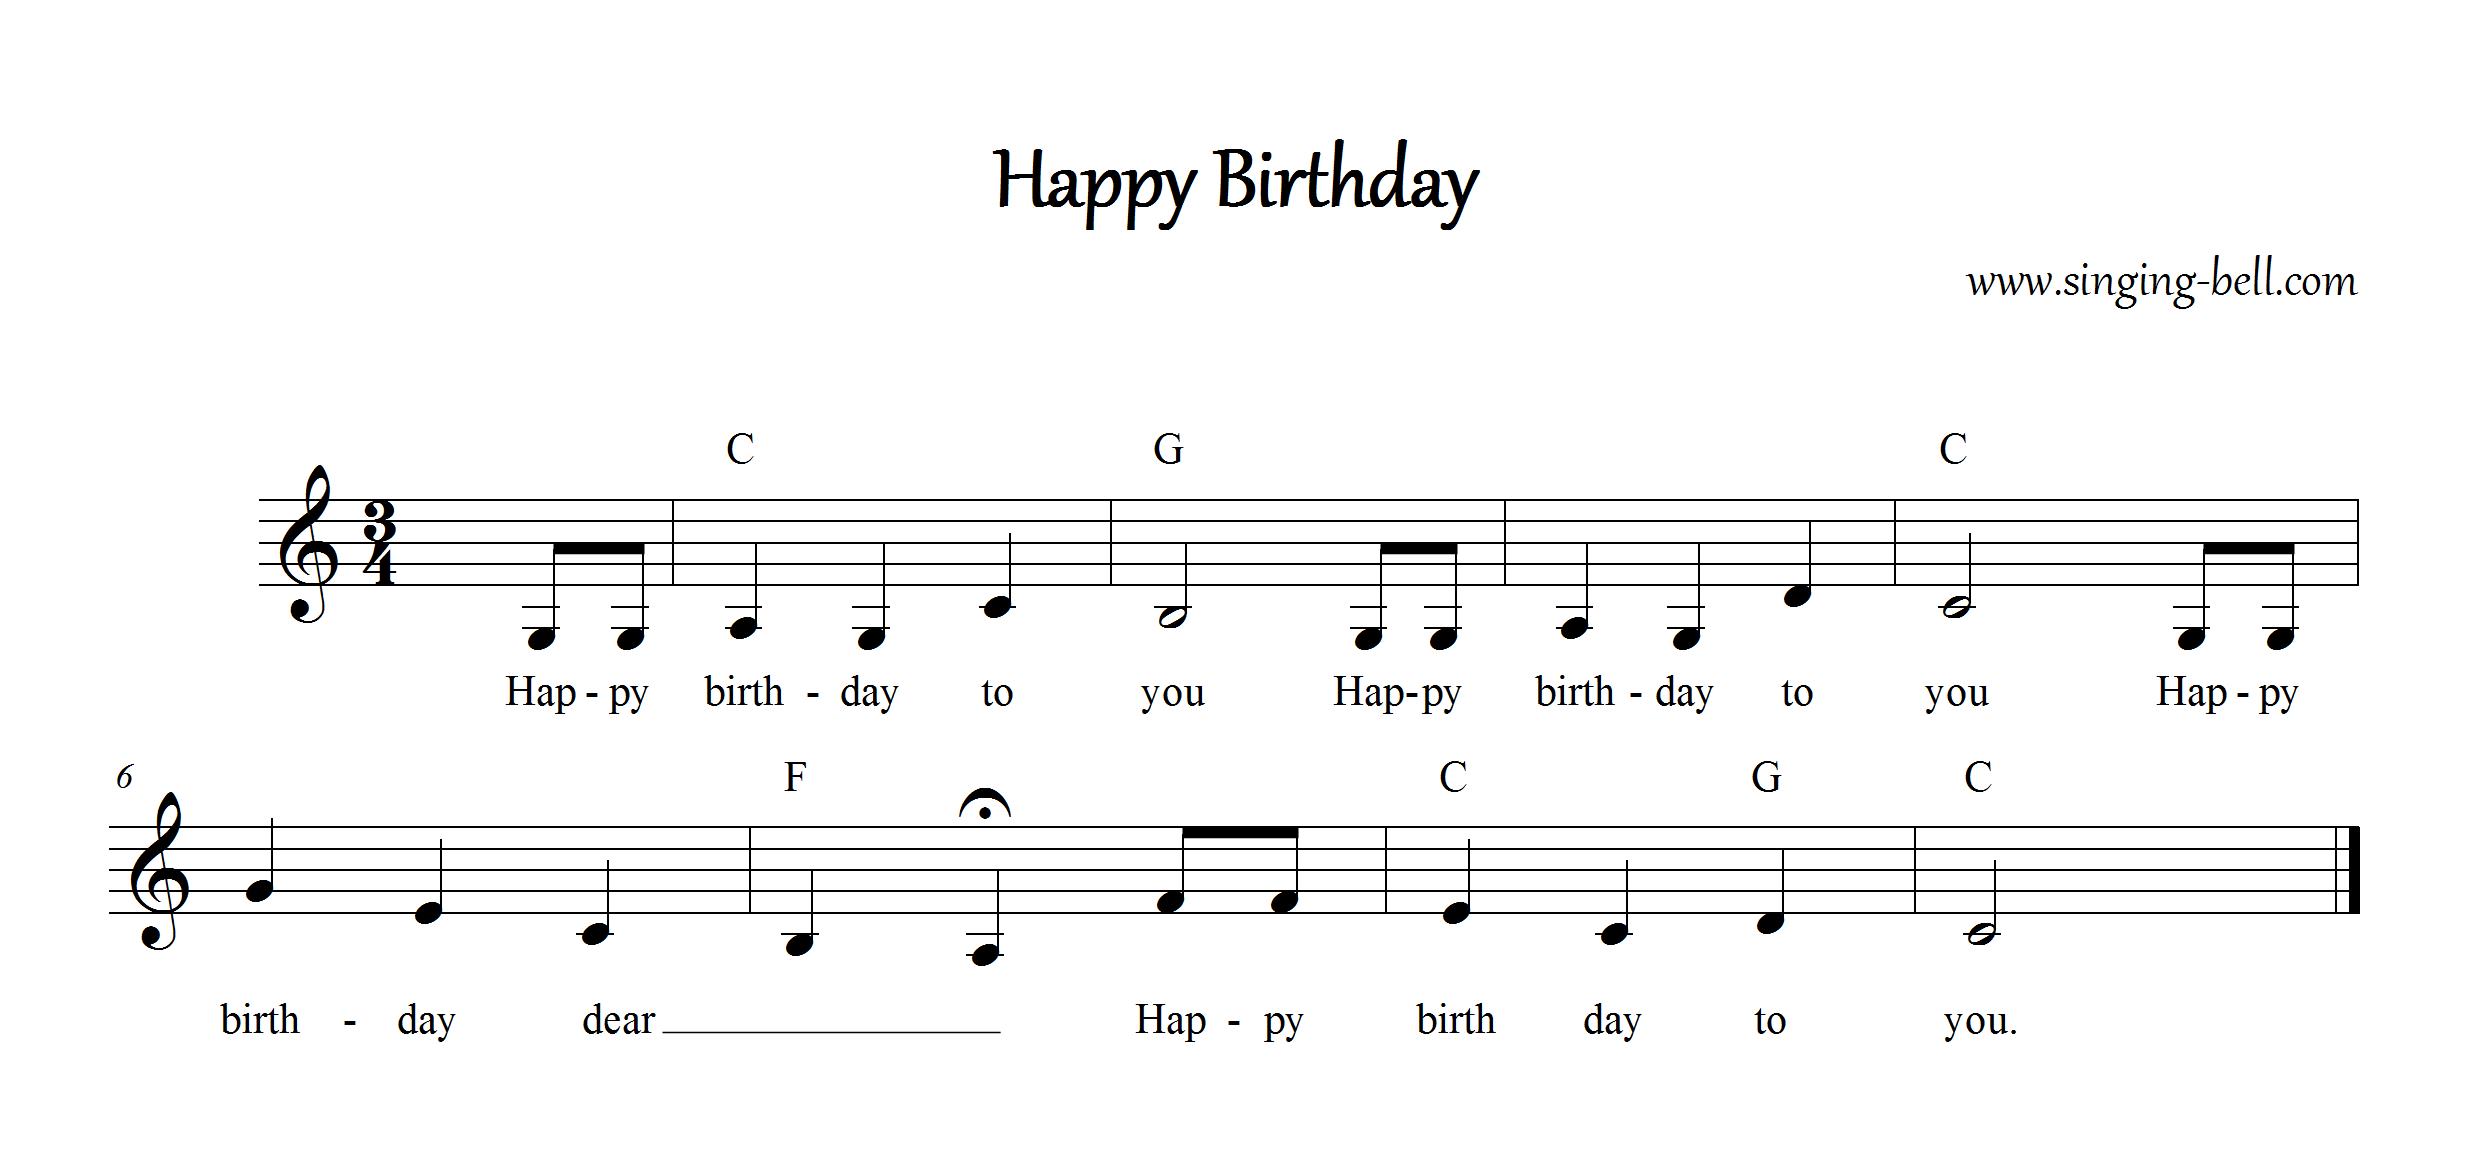 Happy Birthday Sheet Music in C